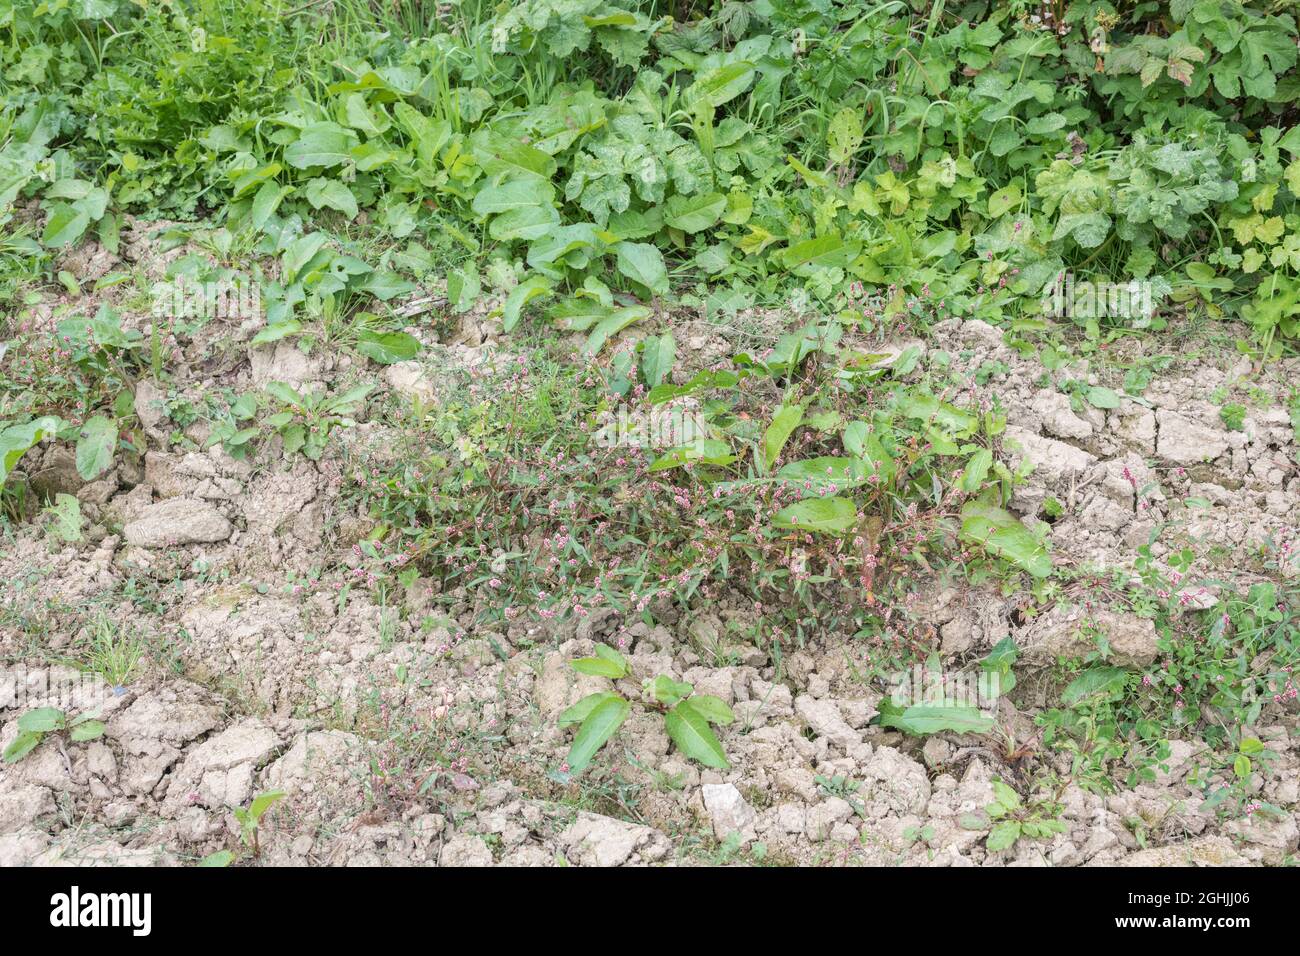 Weed infestation of arable field in UK. Redshank / Polygonum persicaria (centre) & Broad-leaved dock / Rumex obtusifolius (back). Both herbal plants. Stock Photo